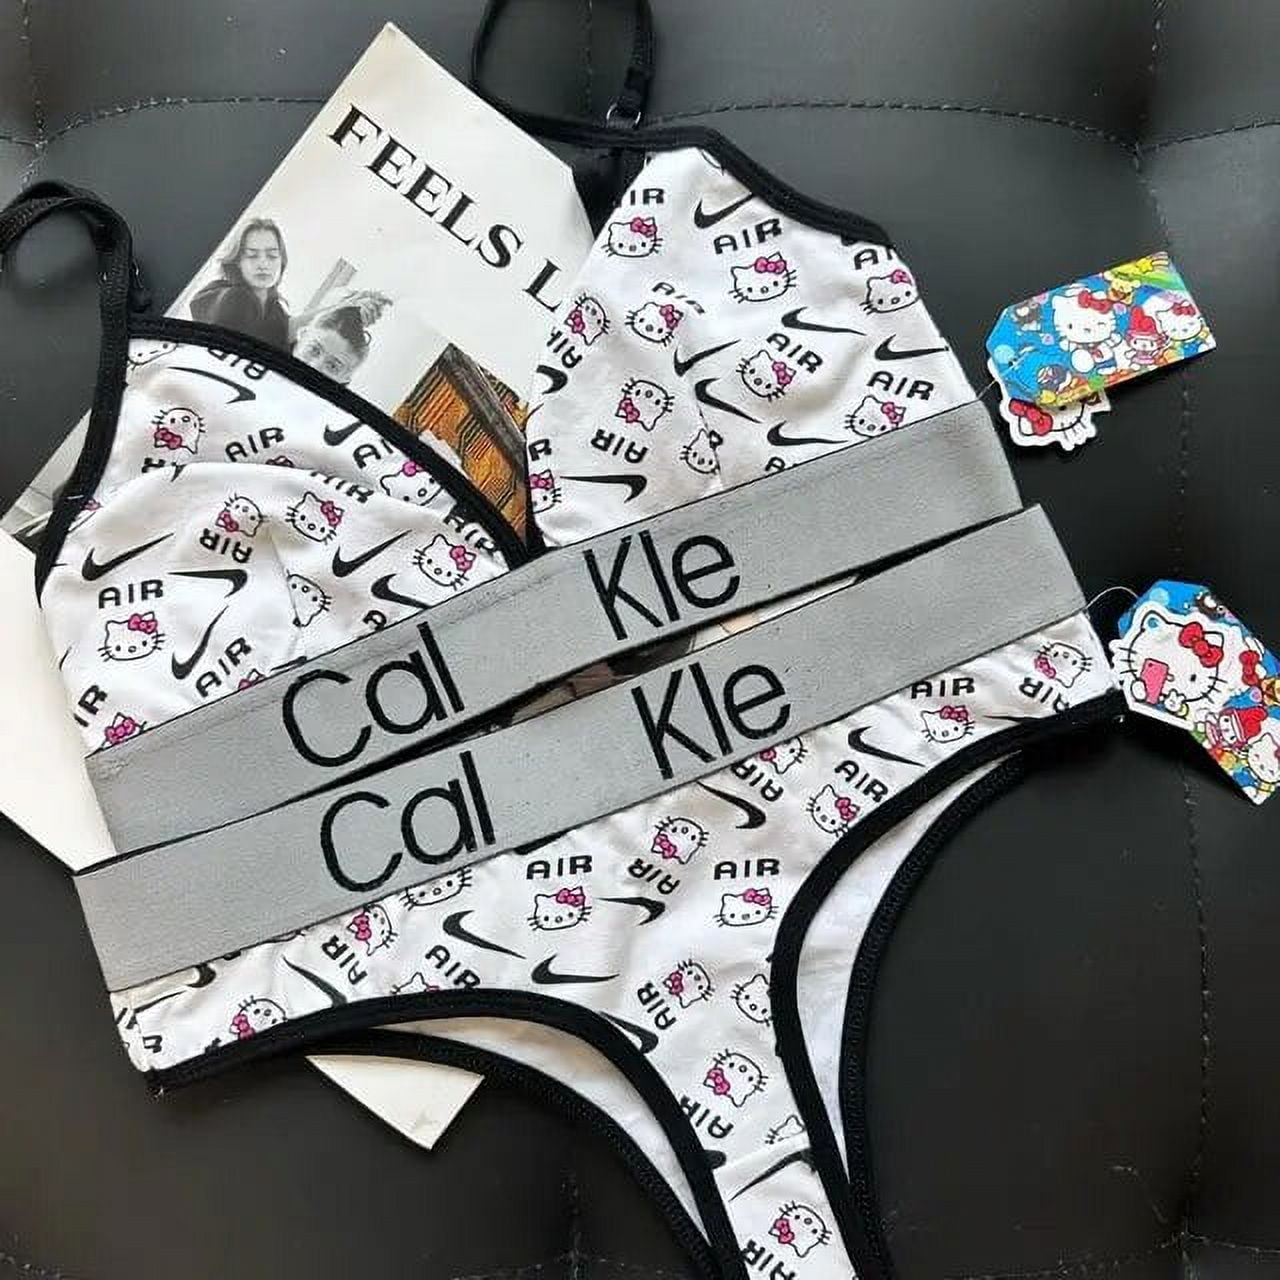 Calvin Klein Hello Kitty